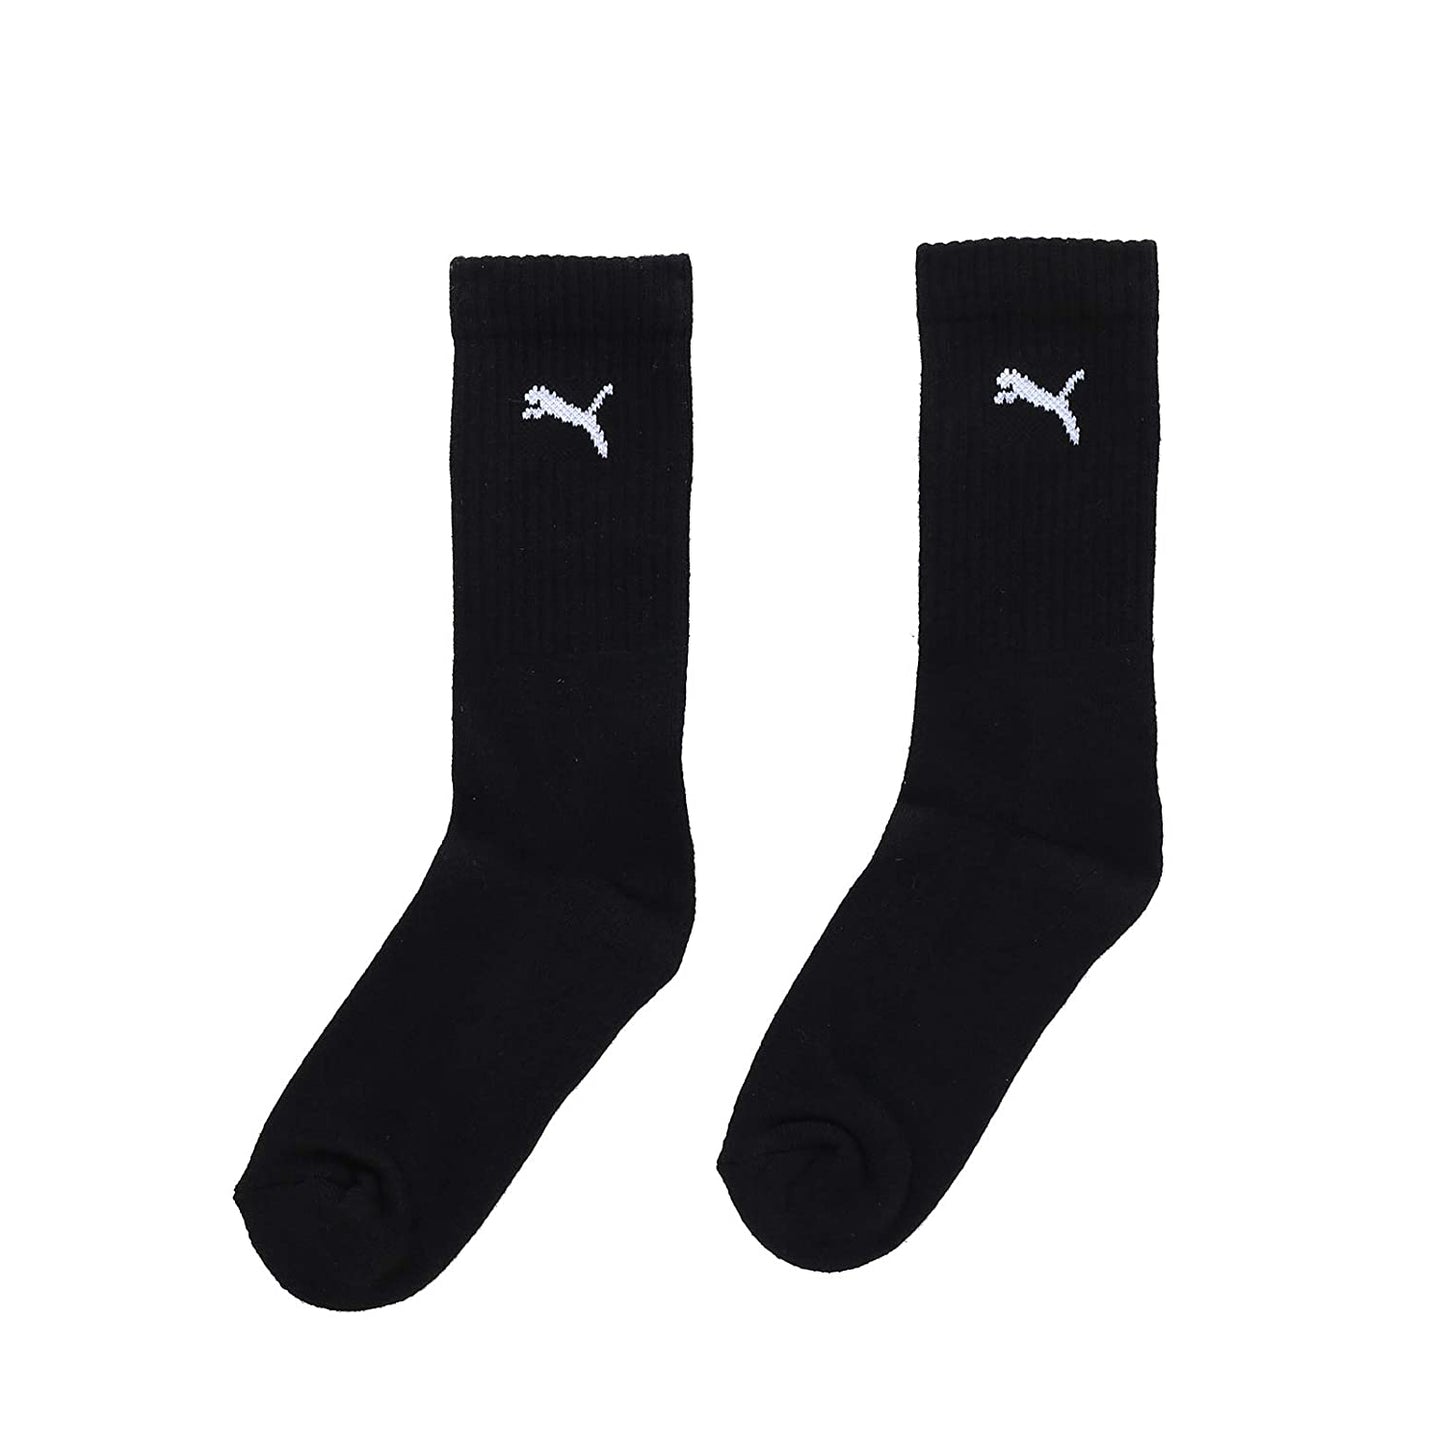 Puma Kids Crew Cushioned Sole Junior Socks,3 Pairs, Black/Black/Black - Best Price online Prokicksports.com